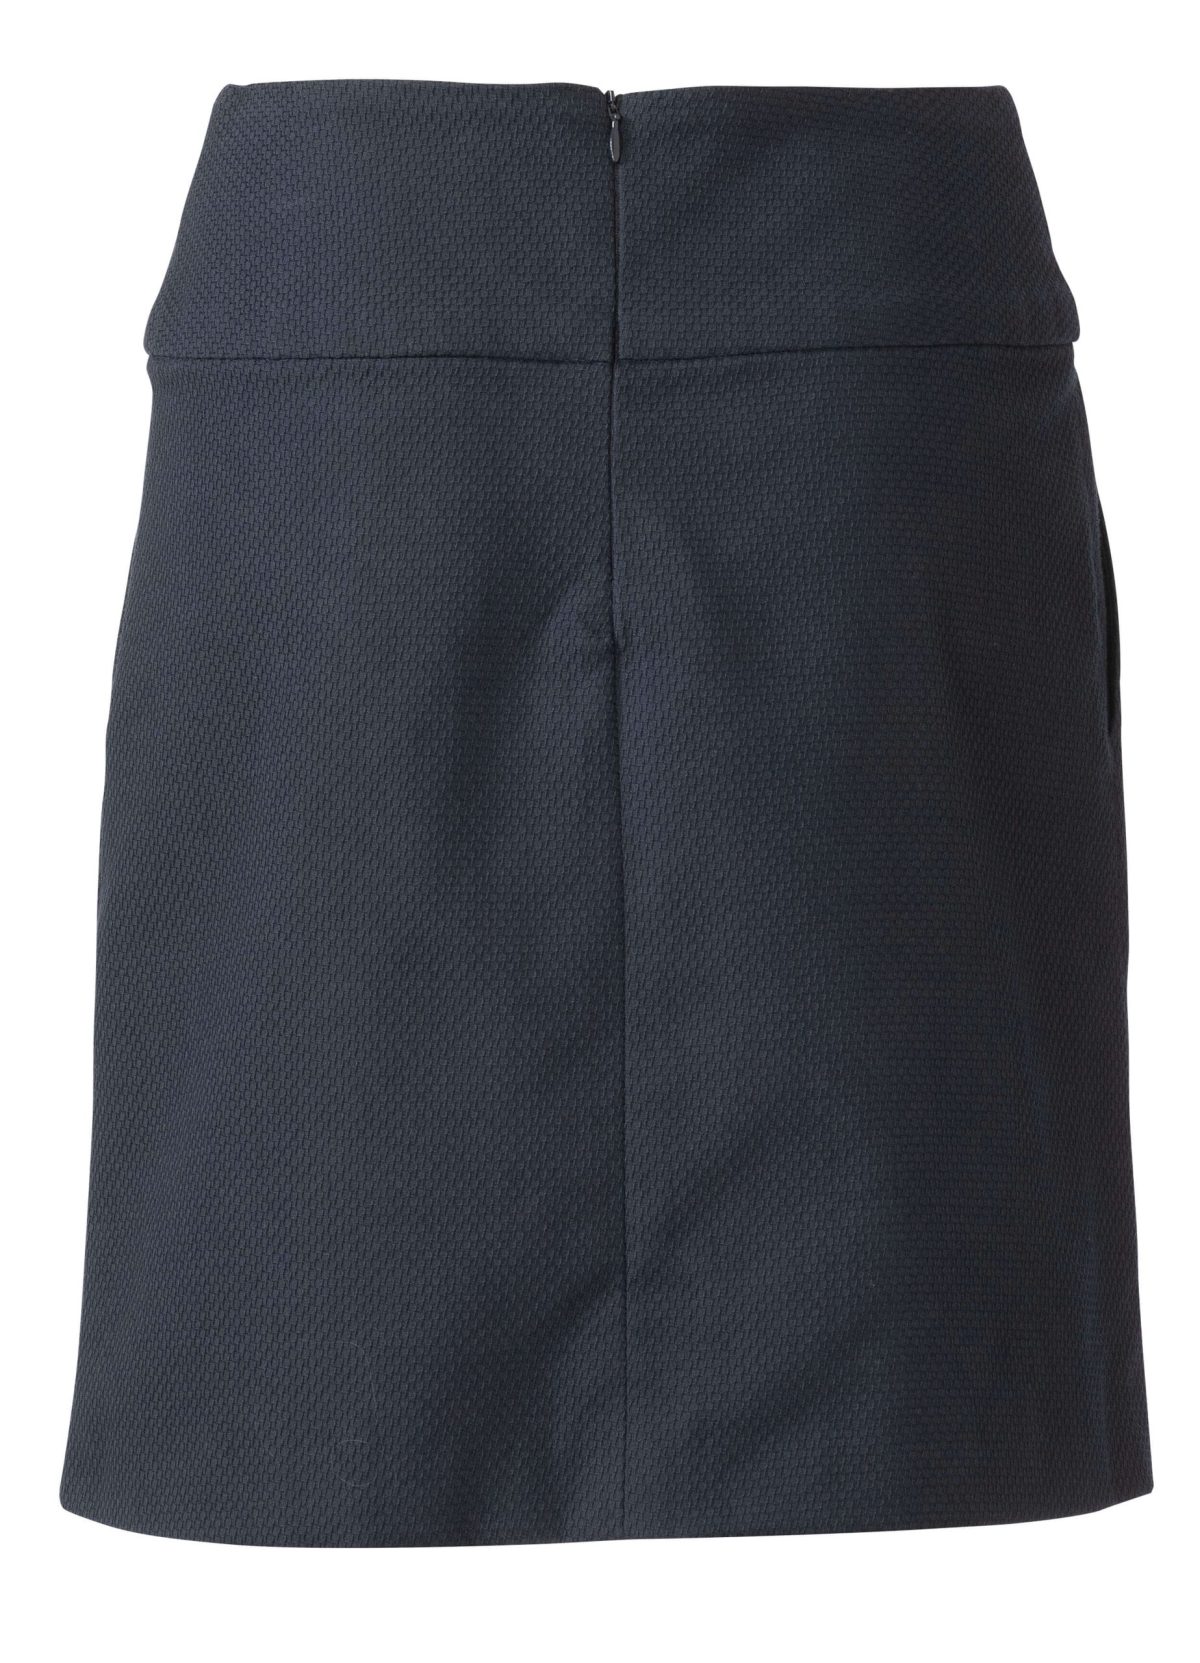 Burda Style Pattern 6235 Misses' Skirt In Two Lengths